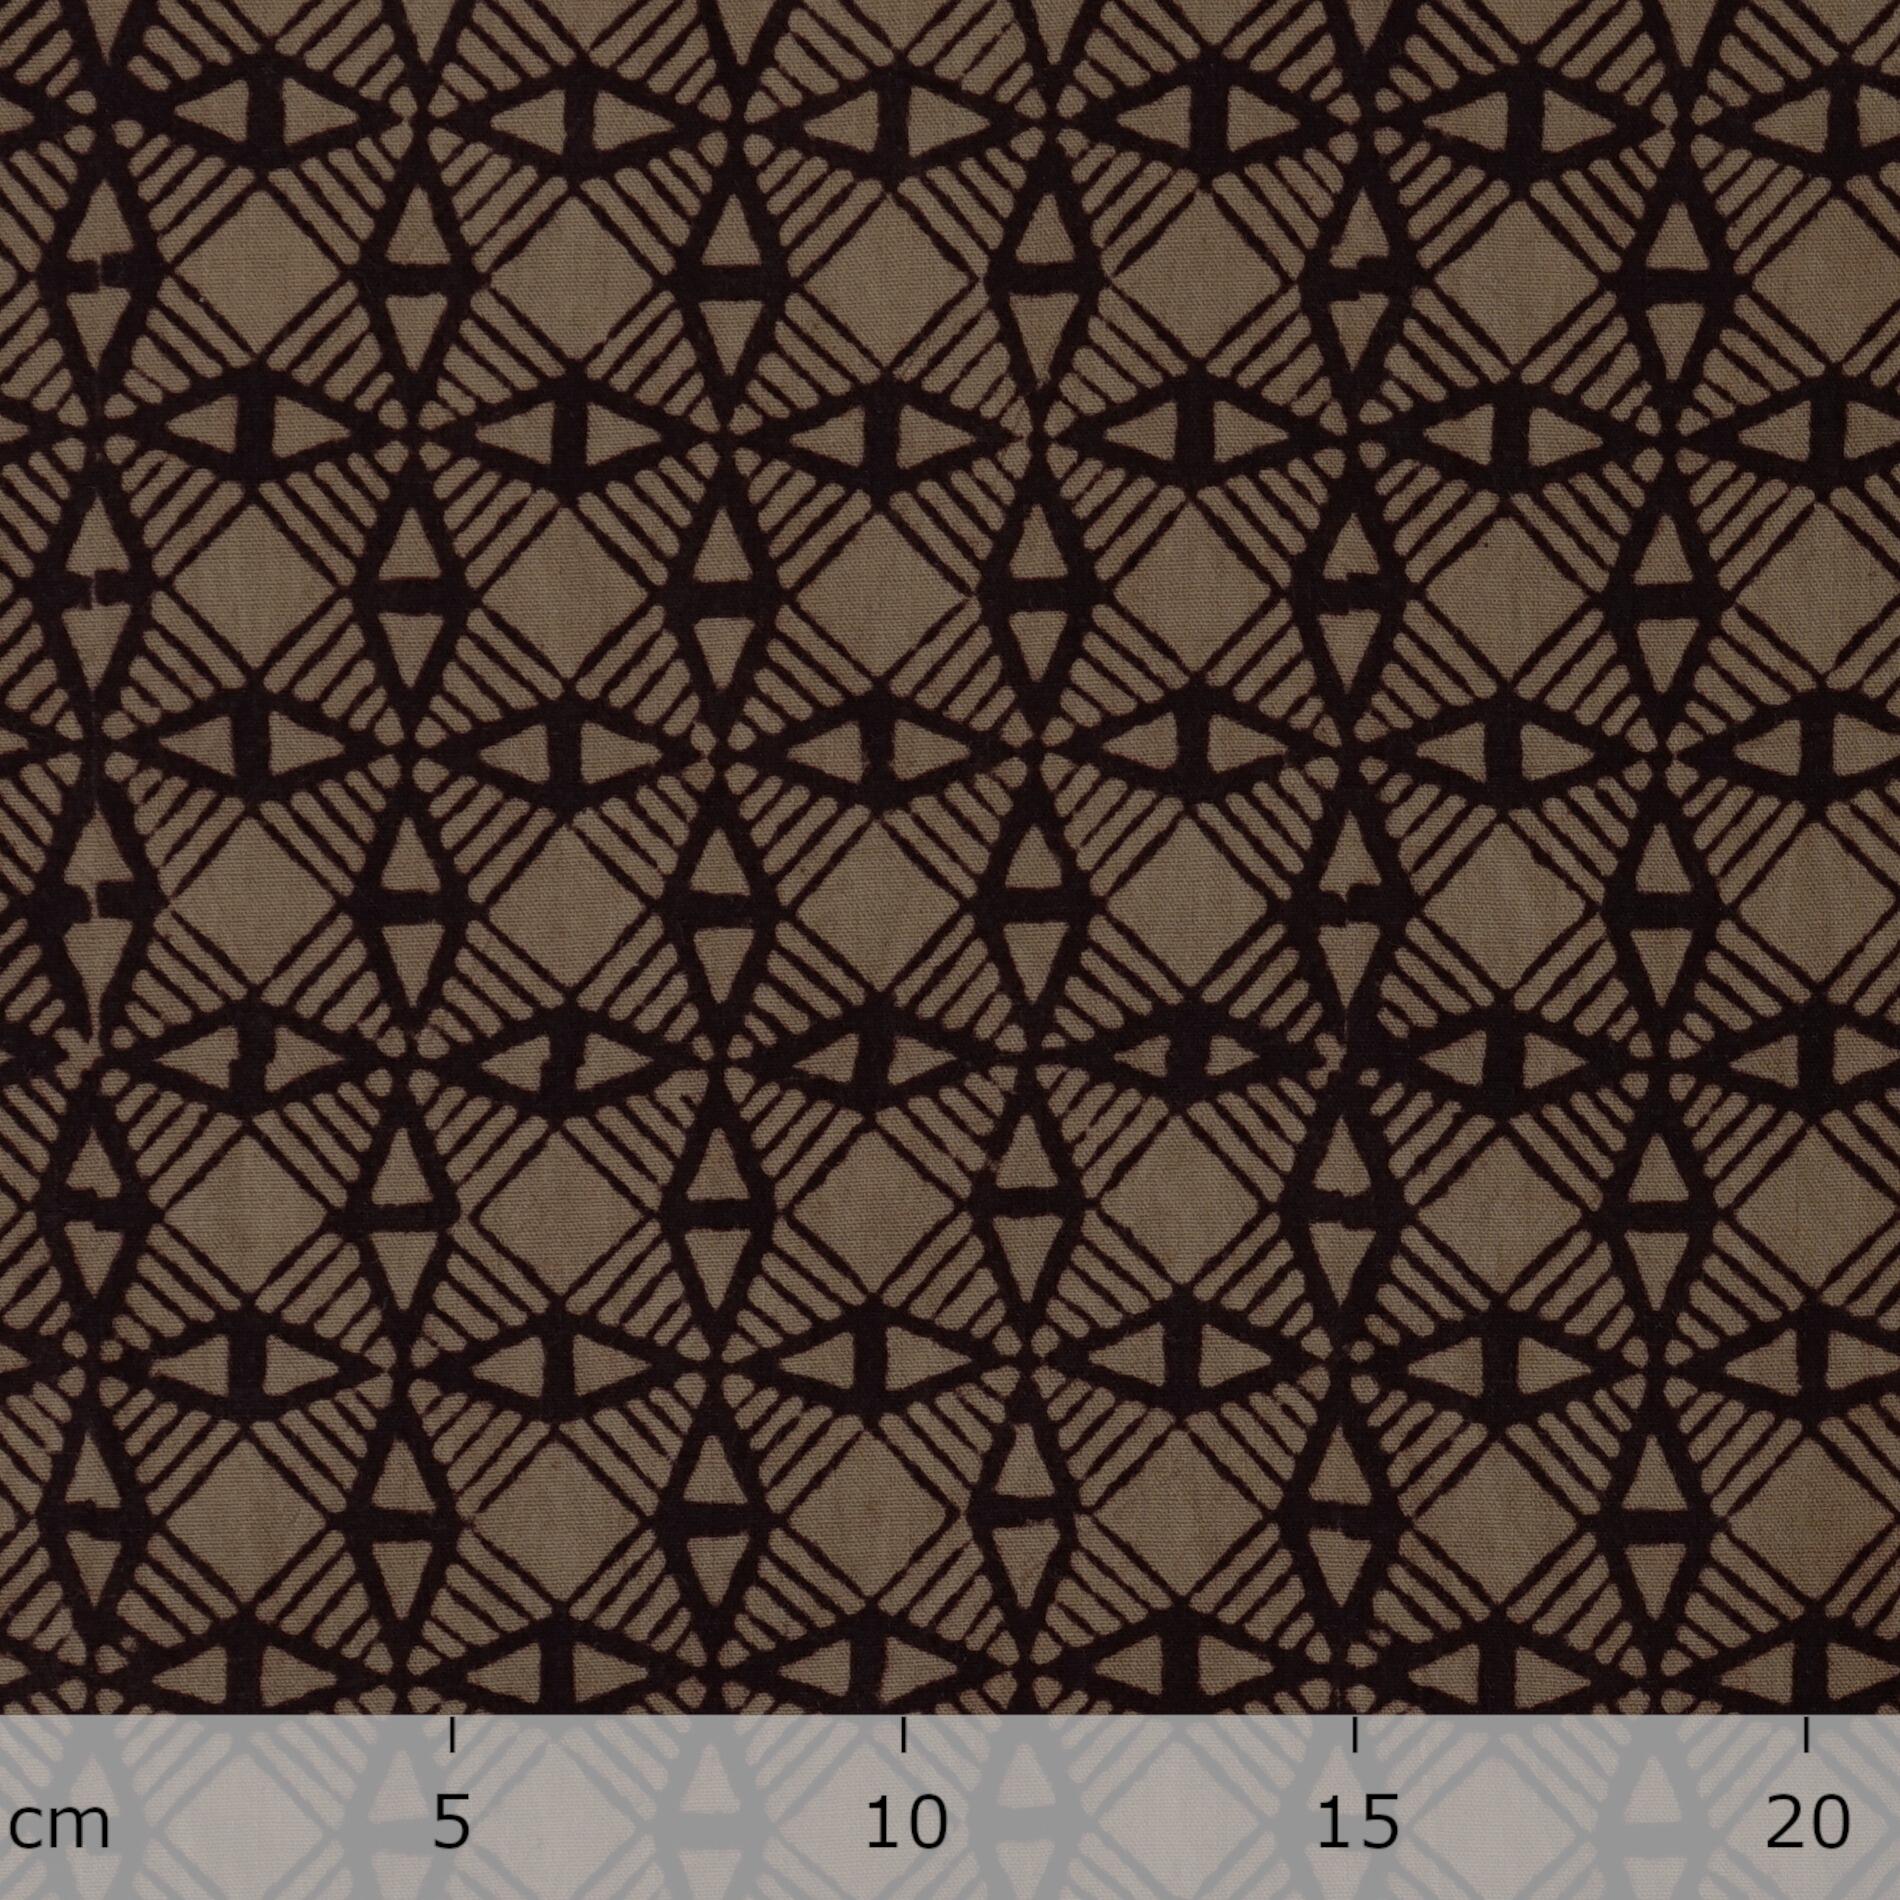 100% Block-Printed Cotton Fabric From India- Bagh - Iron Rust Black & Indigosol Khaki - Big Brother Print - Ruler